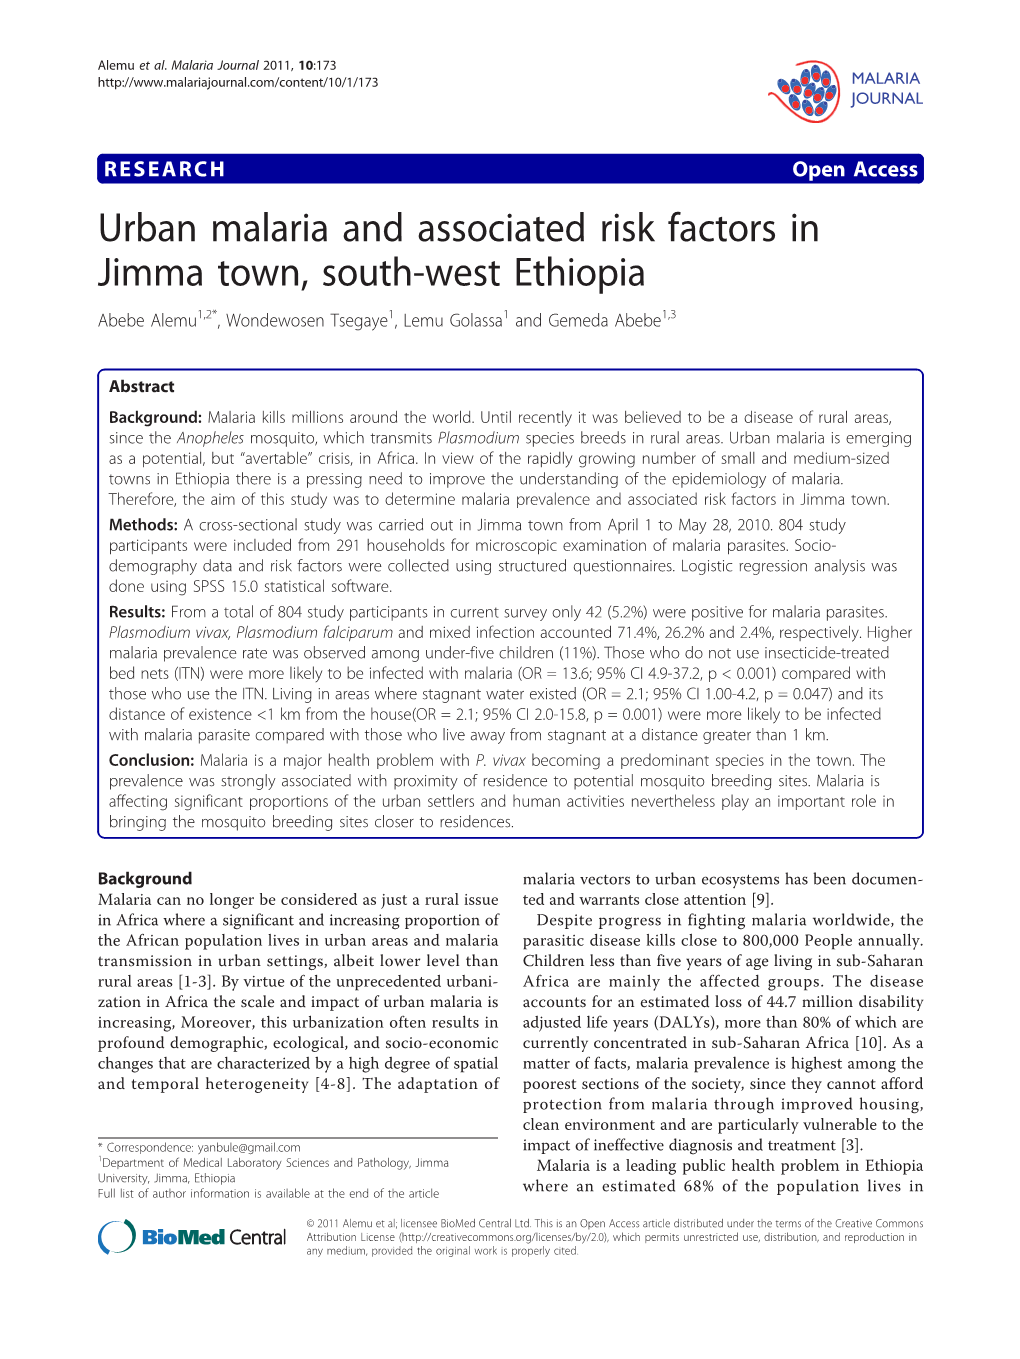 Urban Malaria and Associated Risk Factors in Jimma Town, South-West Ethiopia Abebe Alemu1,2*, Wondewosen Tsegaye1, Lemu Golassa1 and Gemeda Abebe1,3